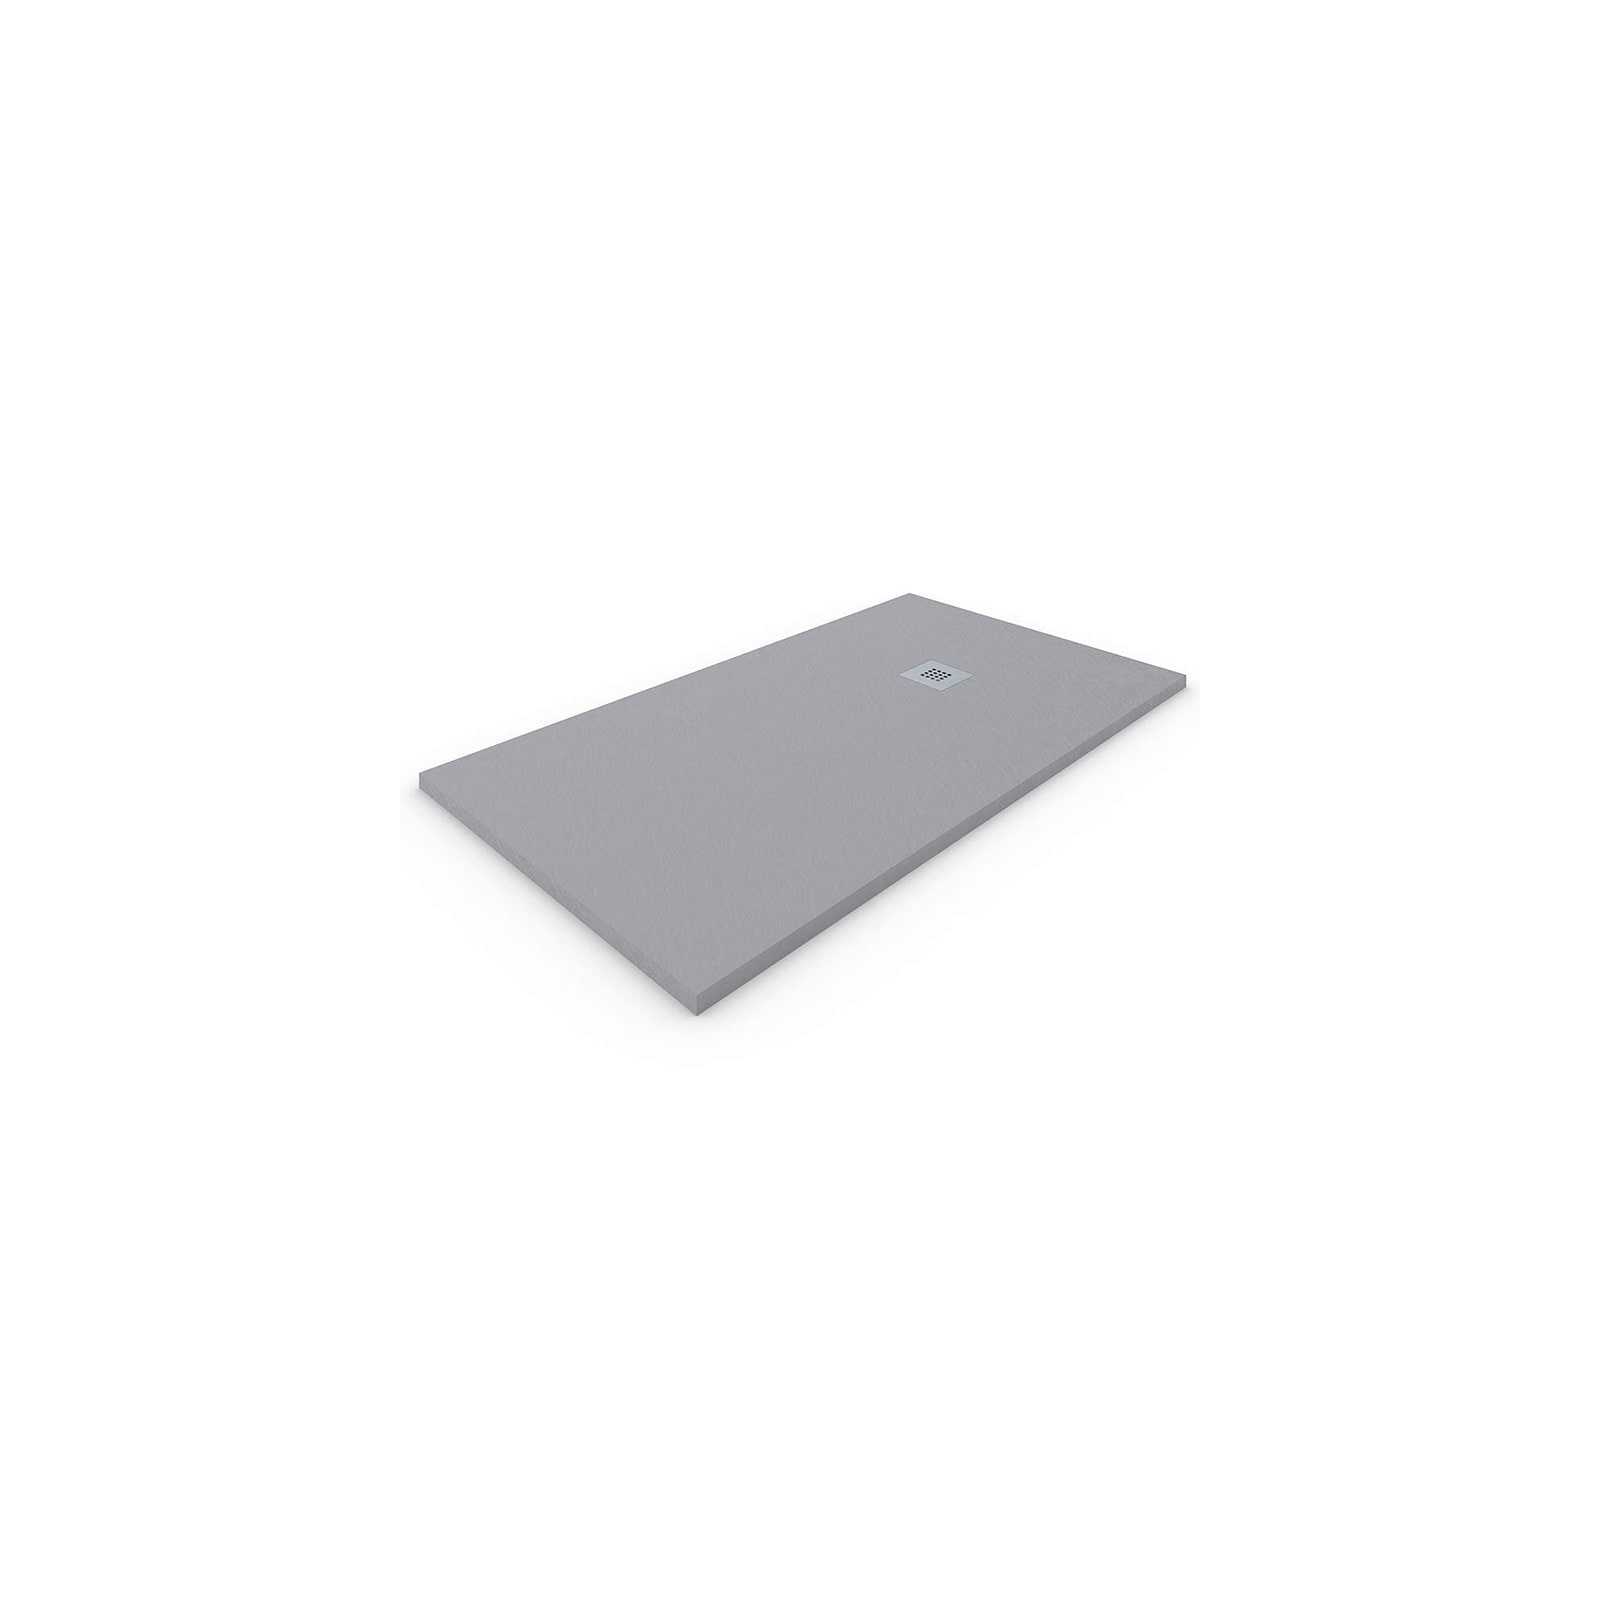 Plato de ducha de resina extraplano gris claro 80x100 cm